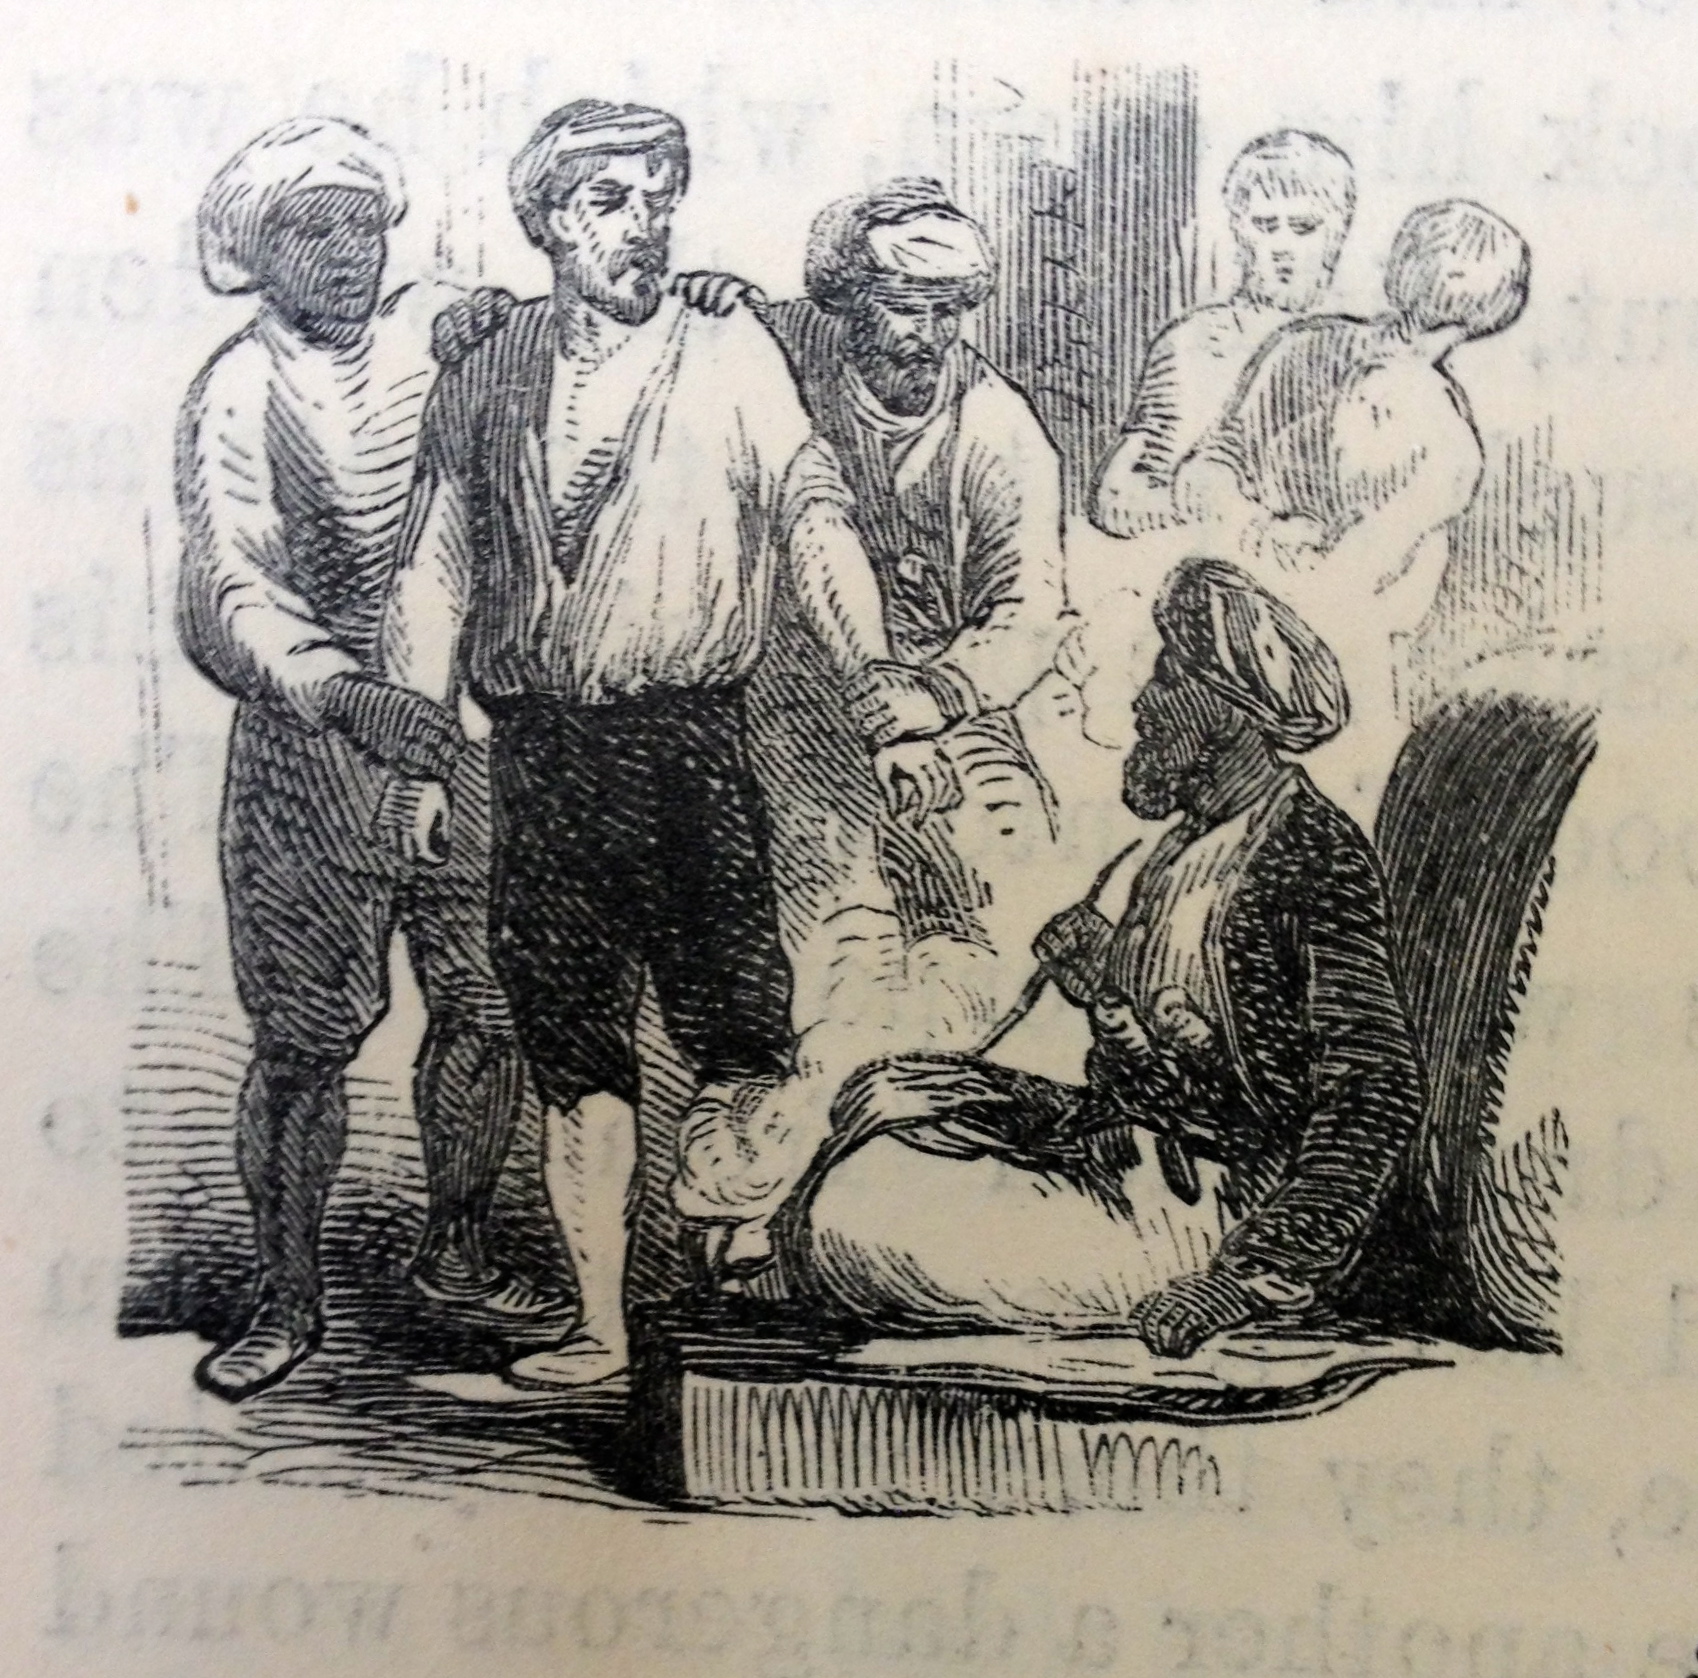 Charles Sumner, White Slavery in the Barbary States (Boston: John P. Jewett and Company), 1853, p. 60.